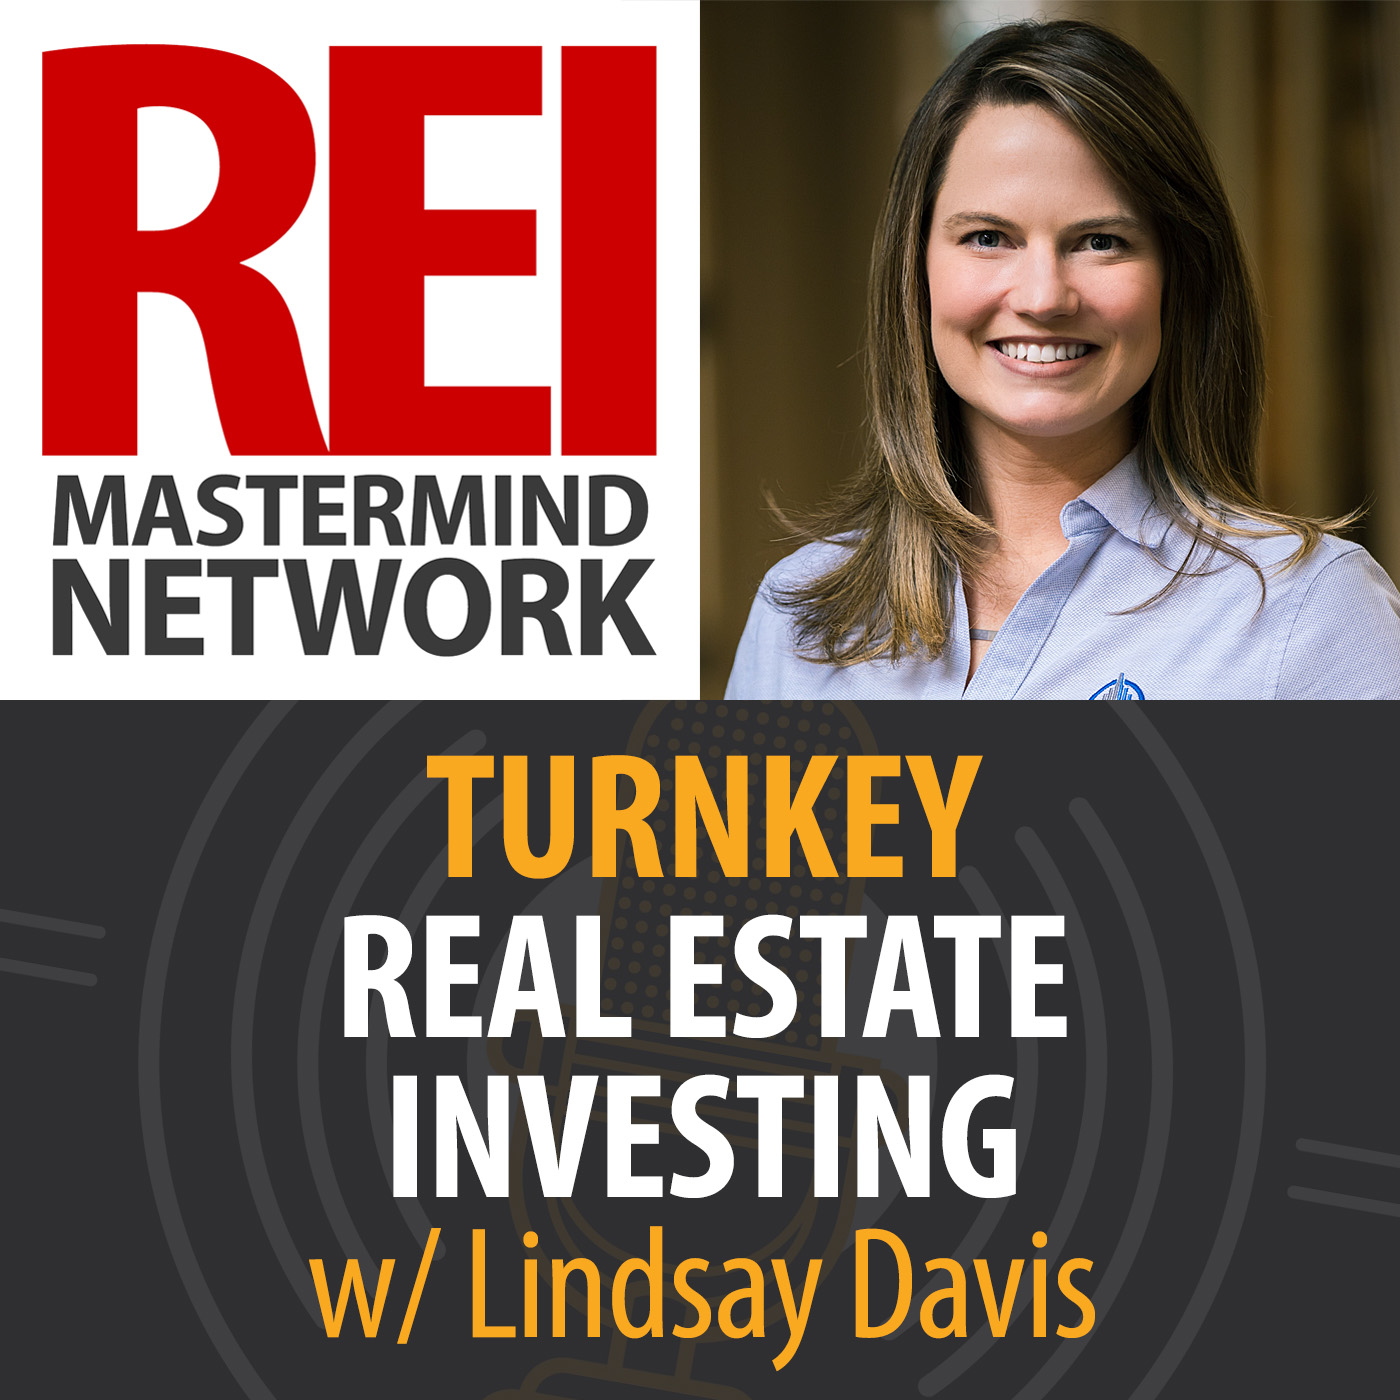 Turnkey Real Estate Investing with Lindsay Davis Image